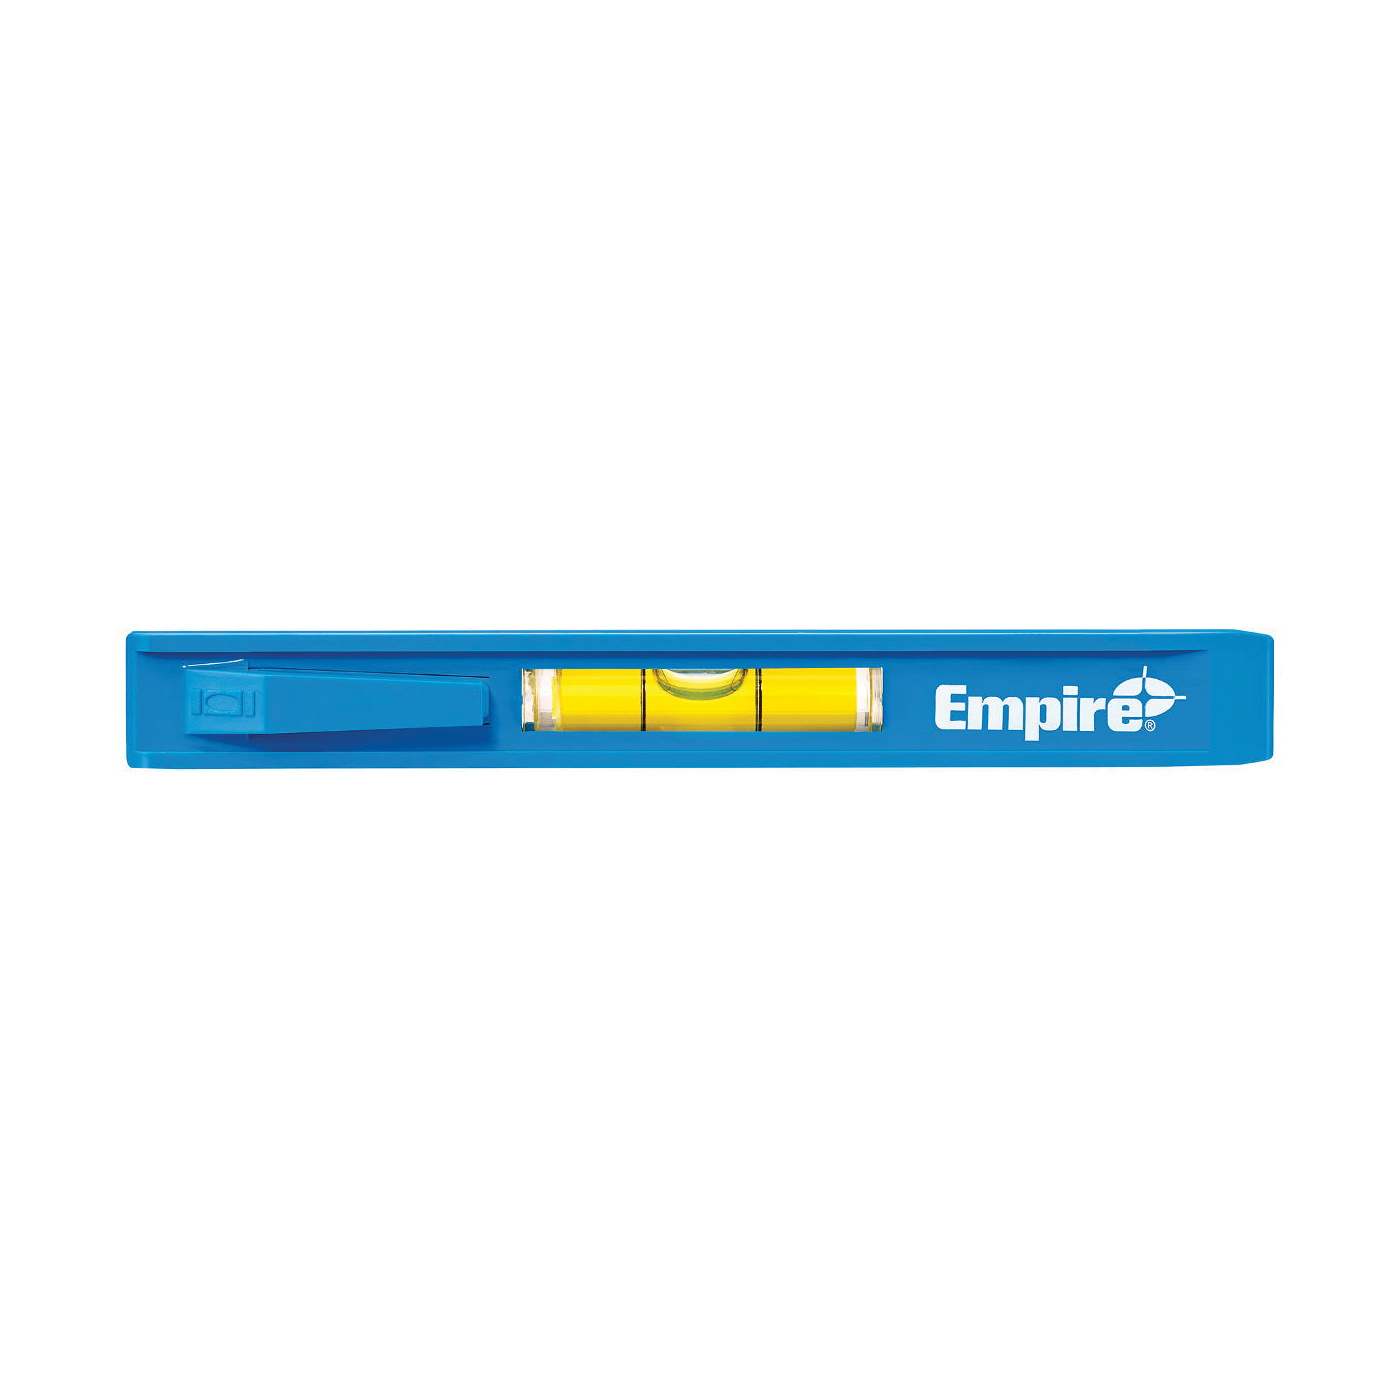 Empire 84-5 Pocket Level, 1 -Vial, Plastic - 1